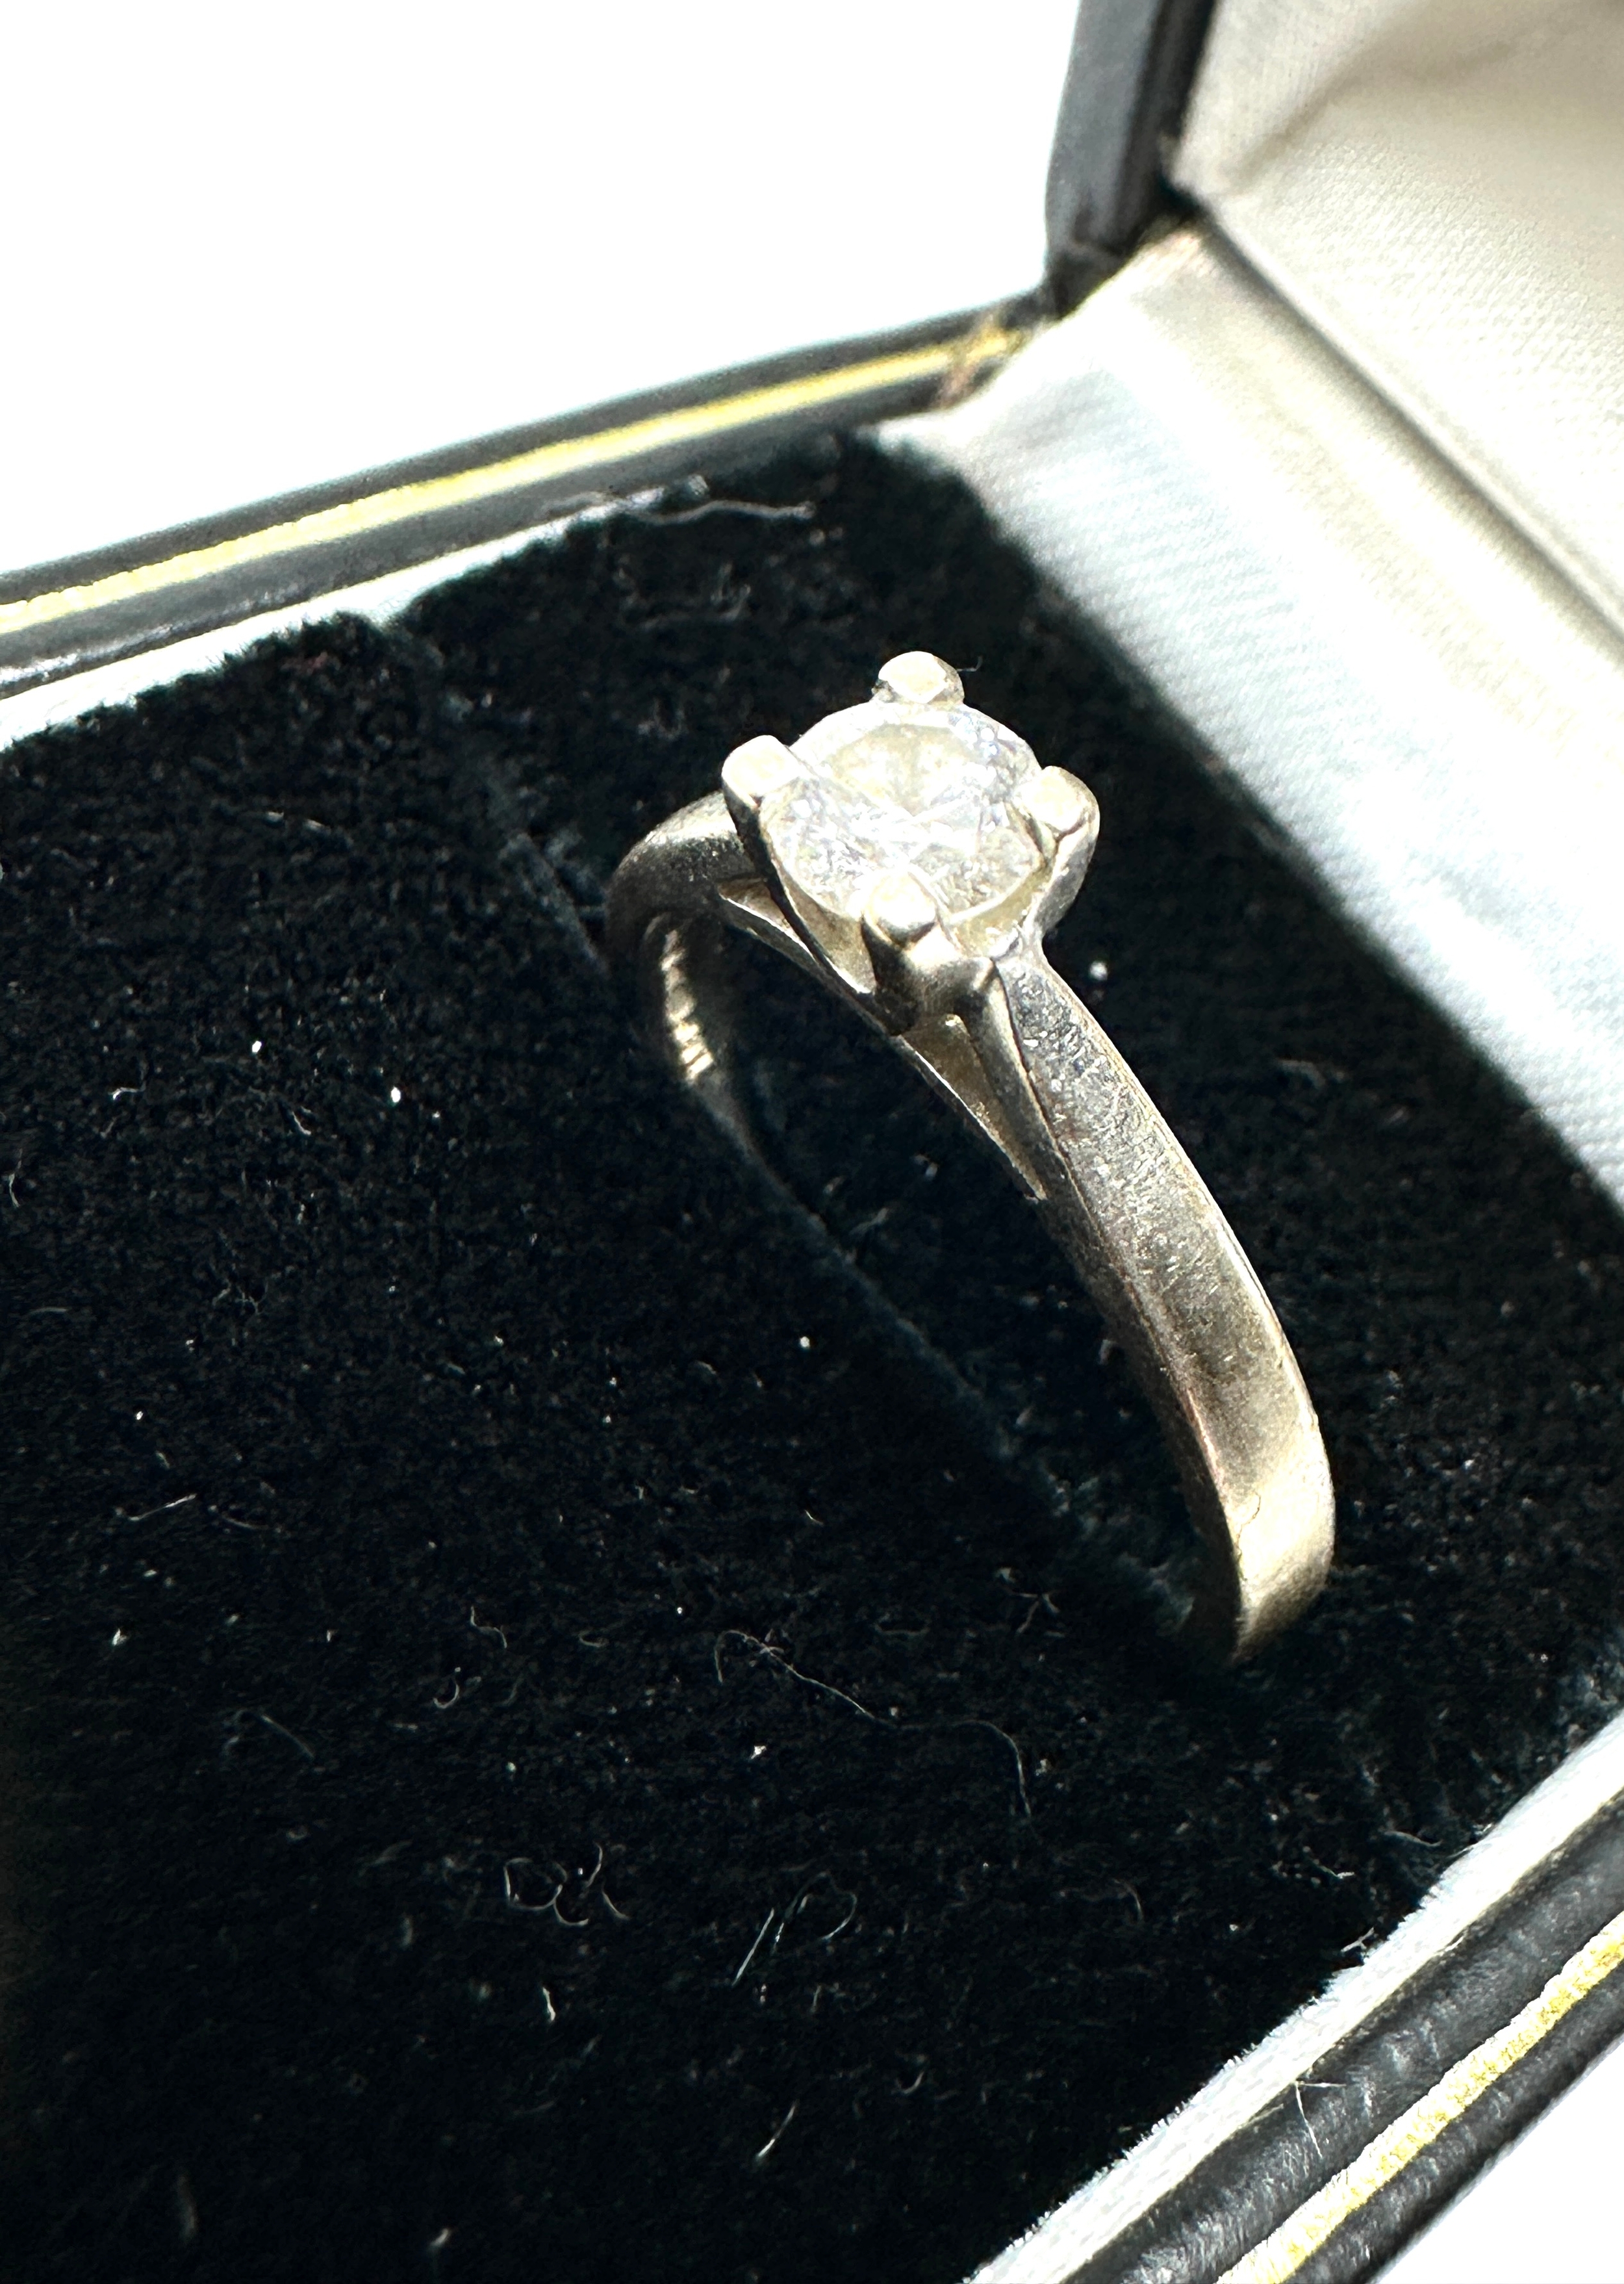 18ct white gold diamond solitaire ring 0.25ct diamond weight 2.8g - Image 3 of 4